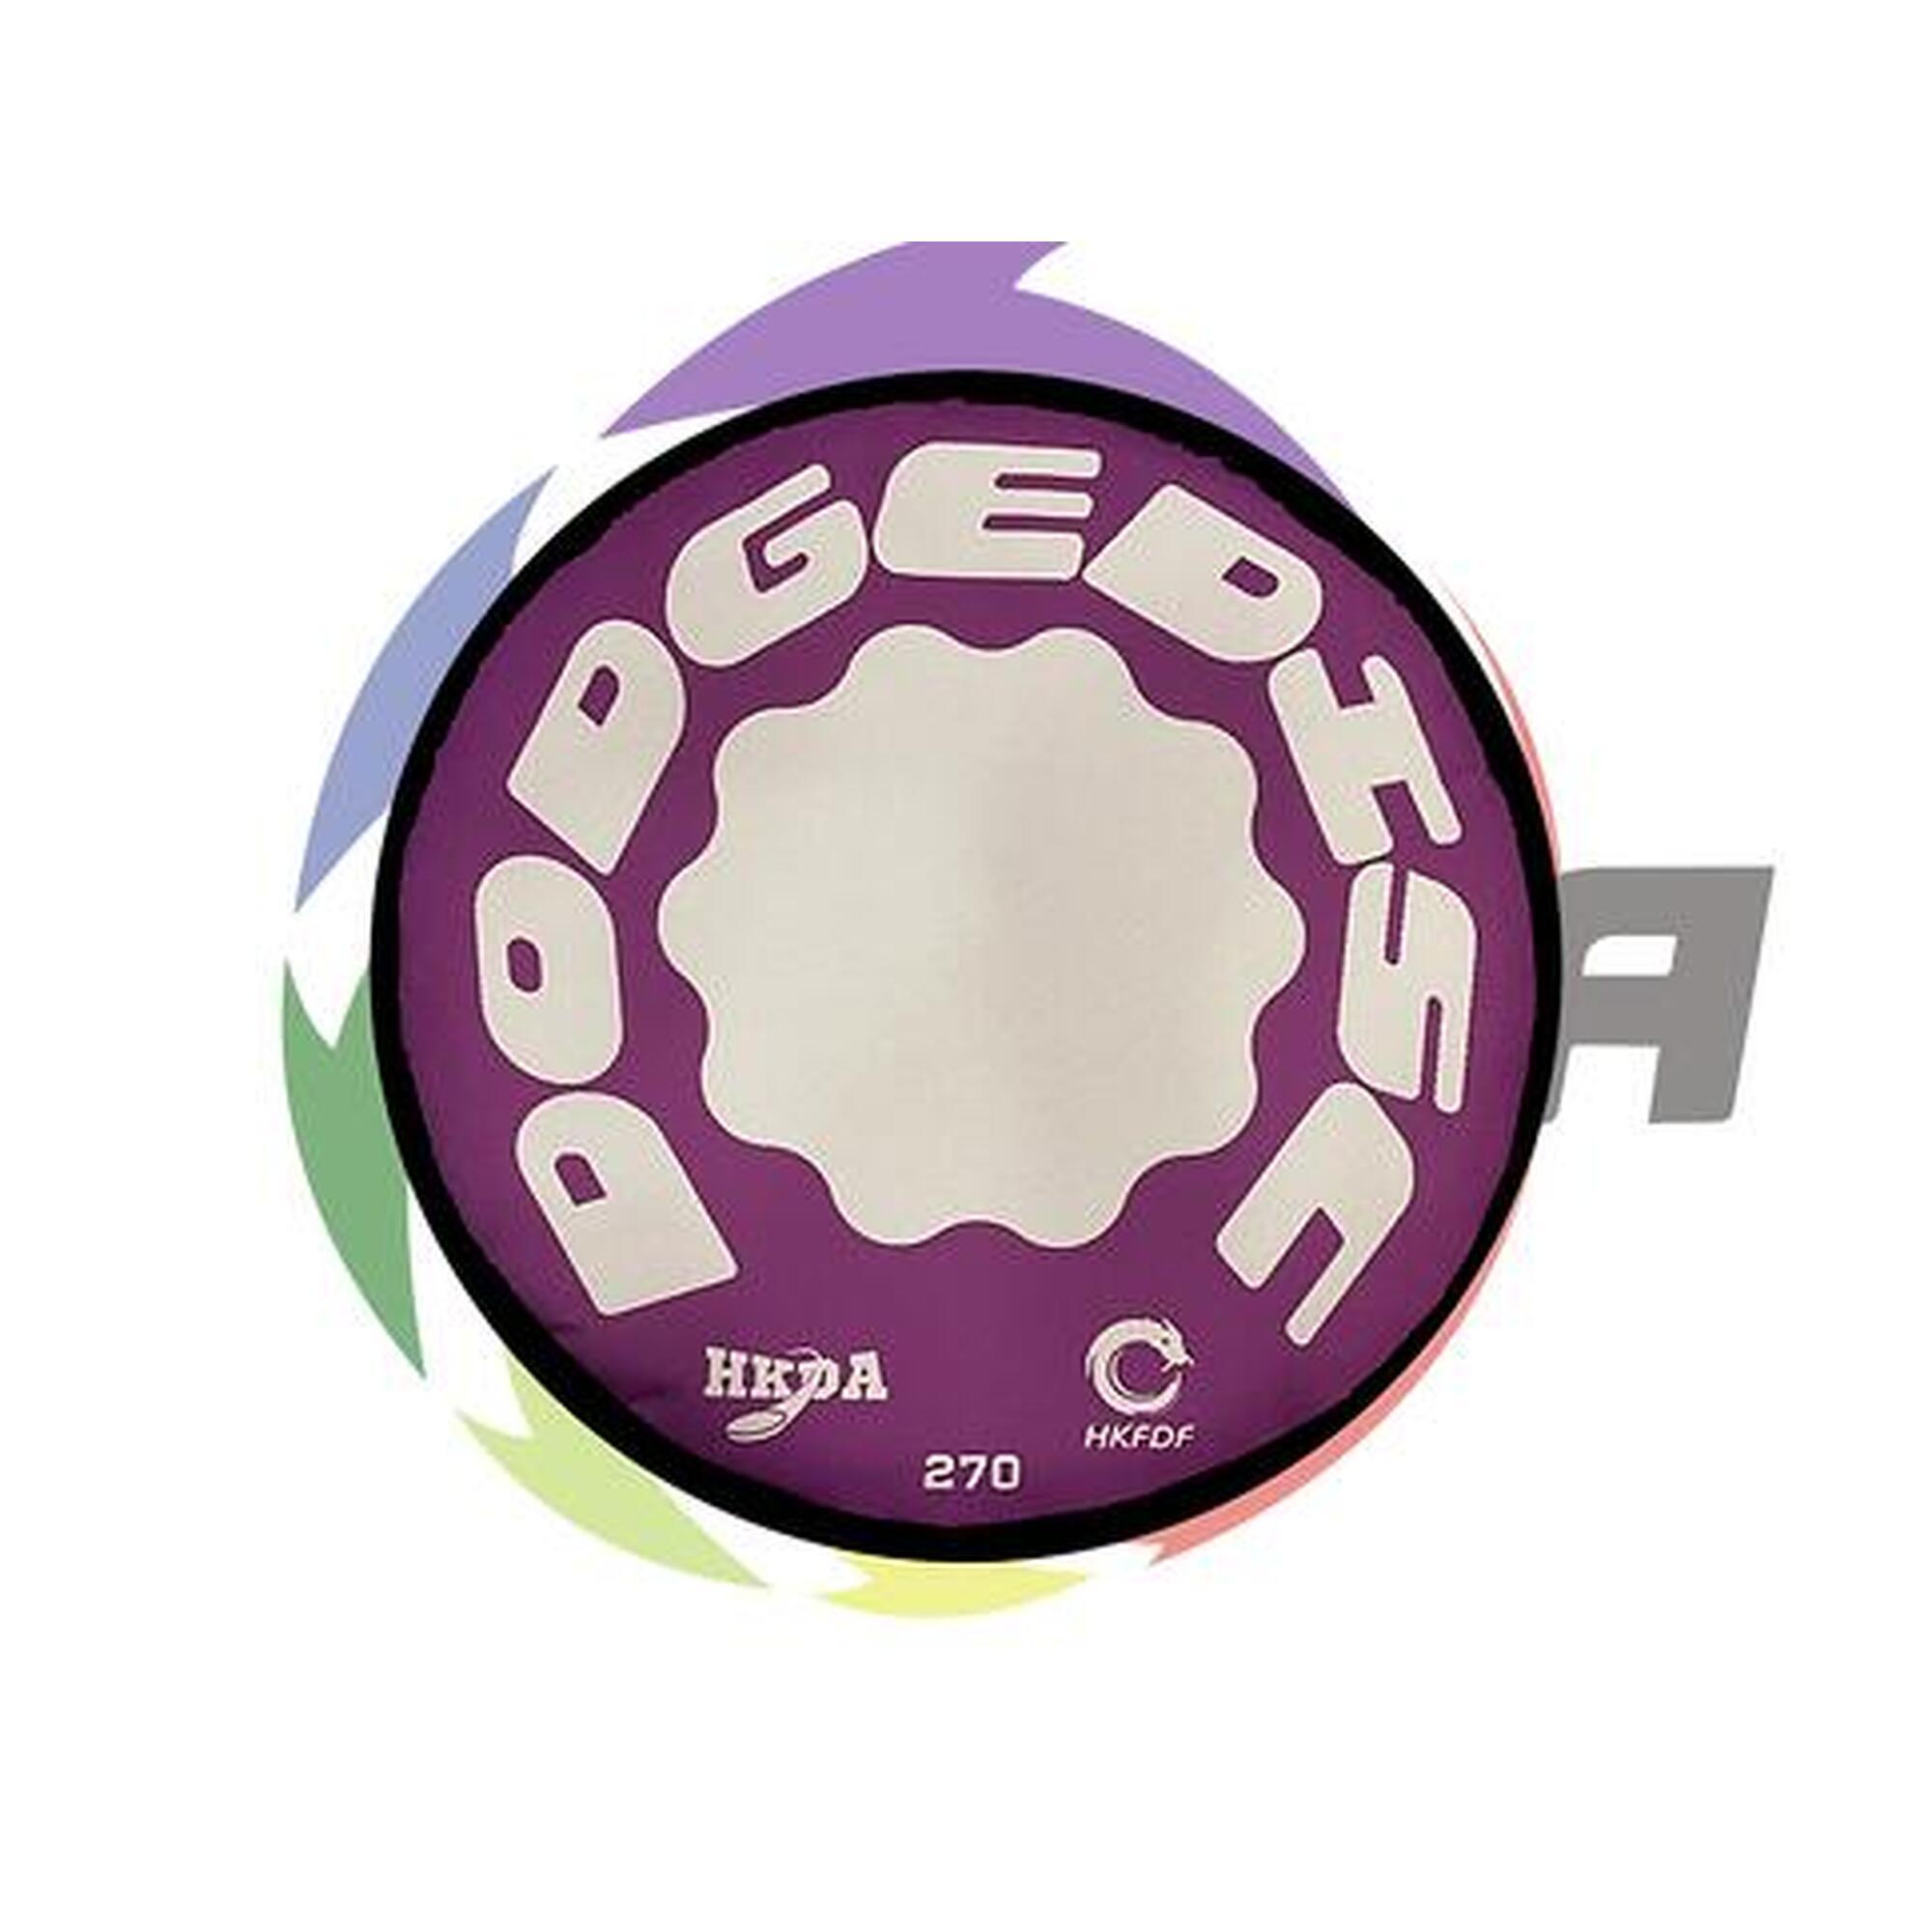 270MM Dodge Disc - Purple & White